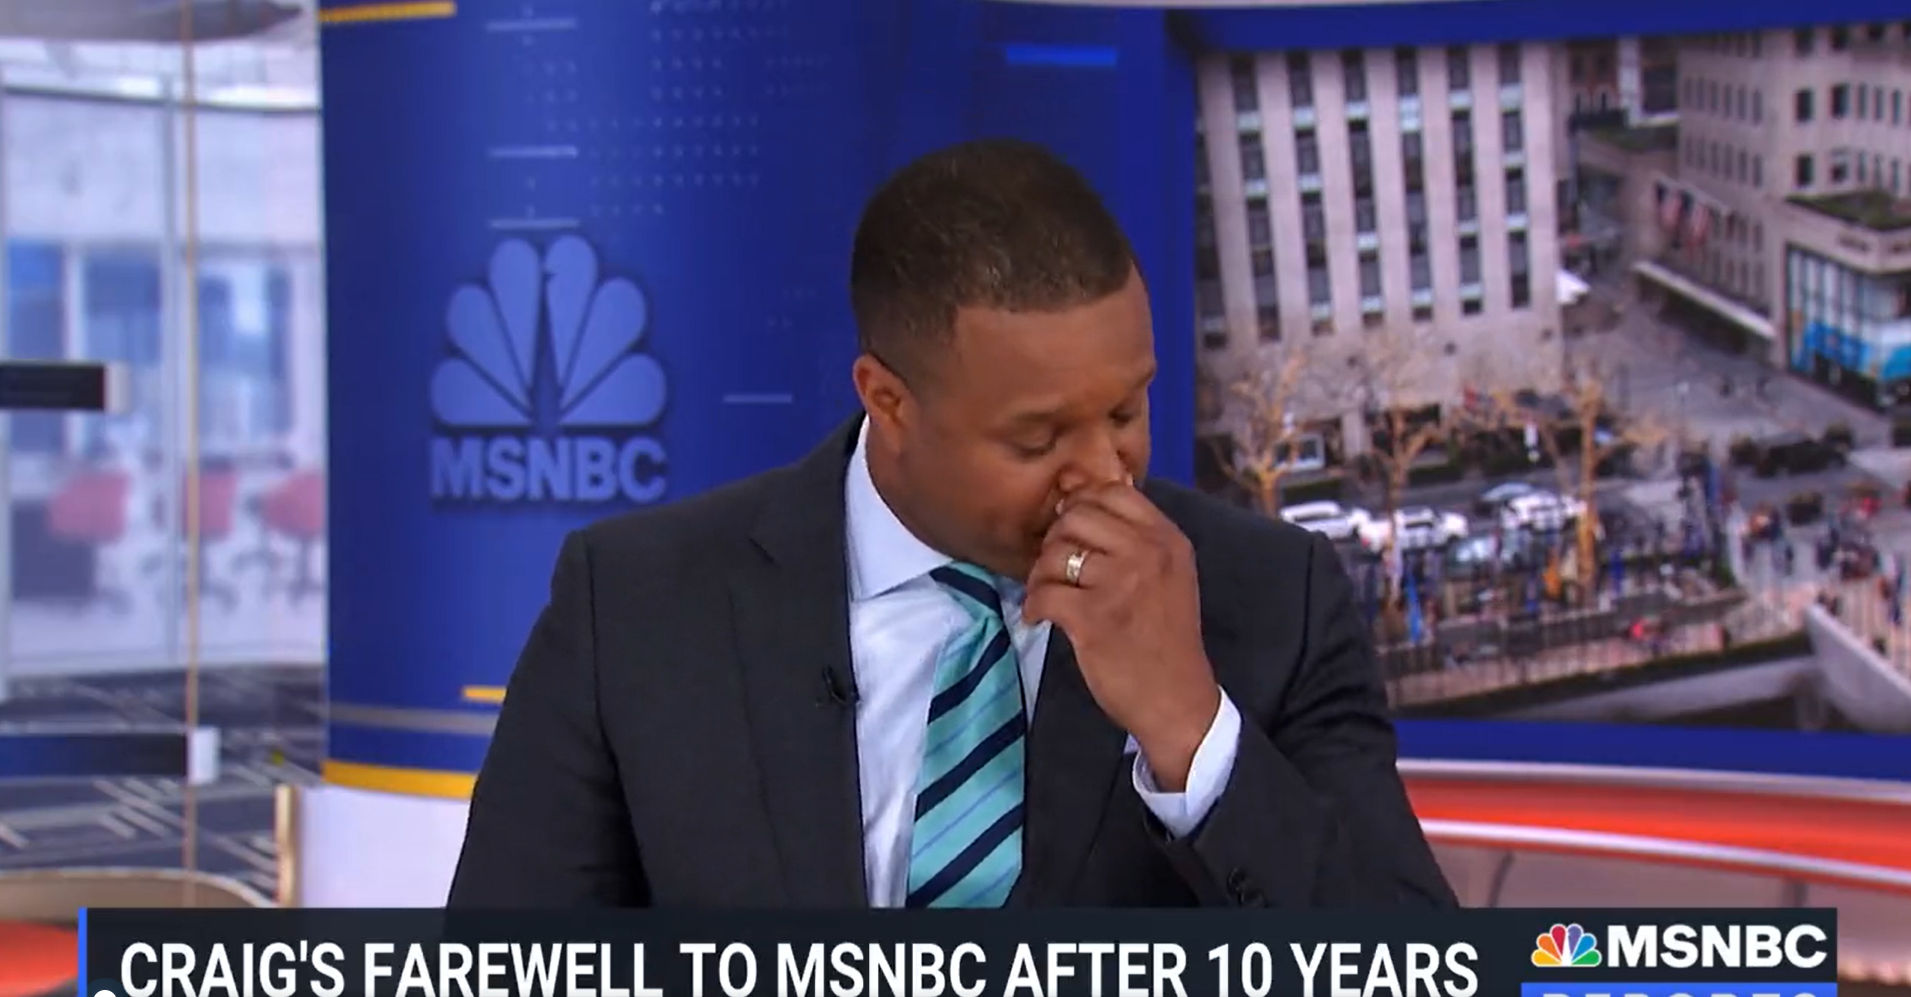 Craig Melvin breaks down as he bids adieu to MSNBC. Watch